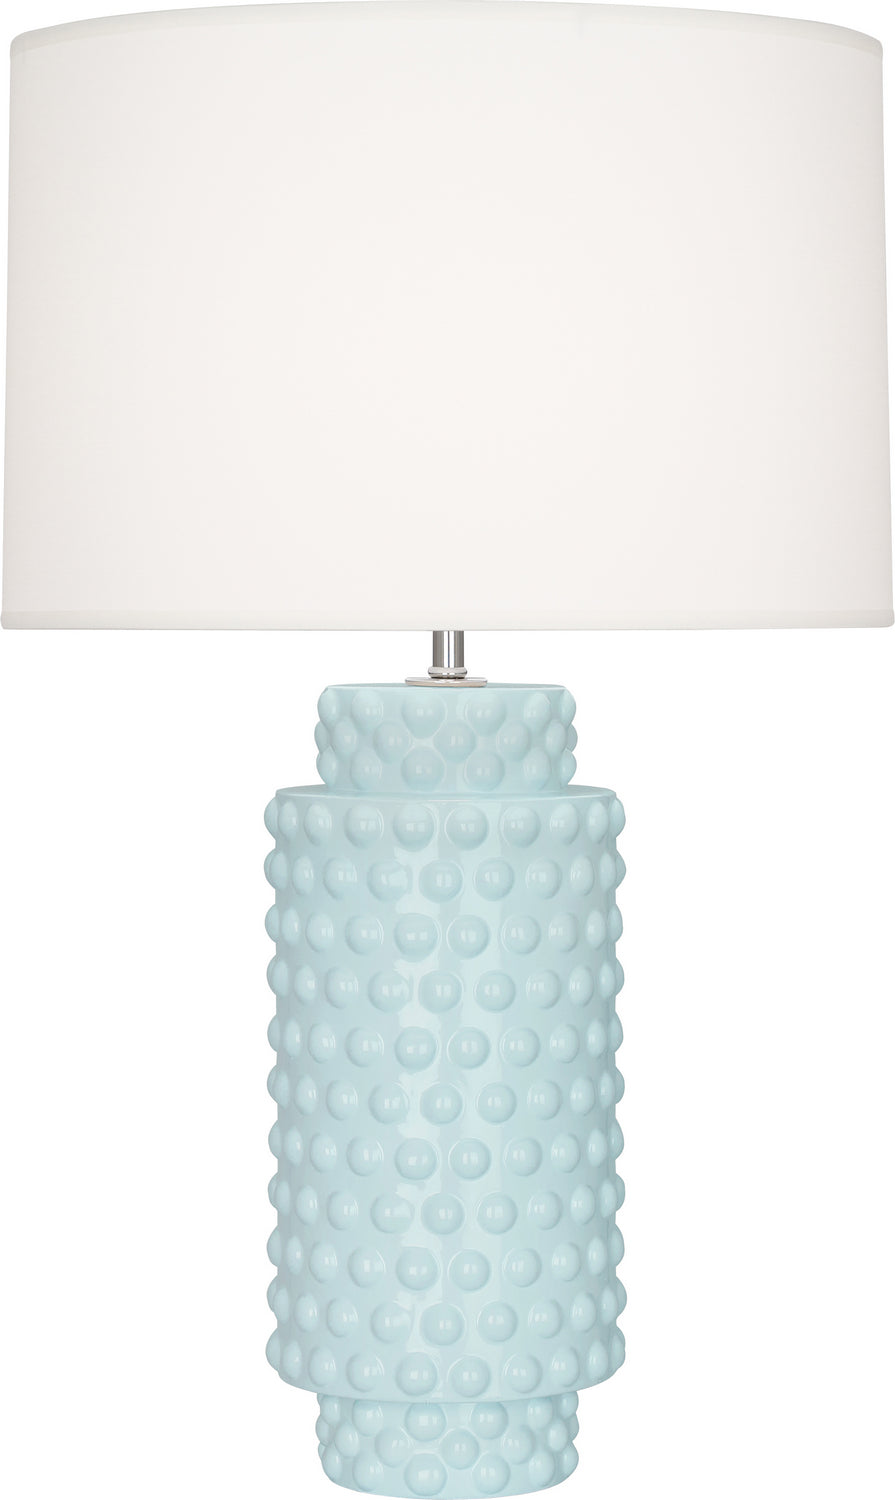 Robert Abbey - One Light Table Lamp - Dolly - Baby Blue Glazed Textured Ceramic- Union Lighting Luminaires Decor